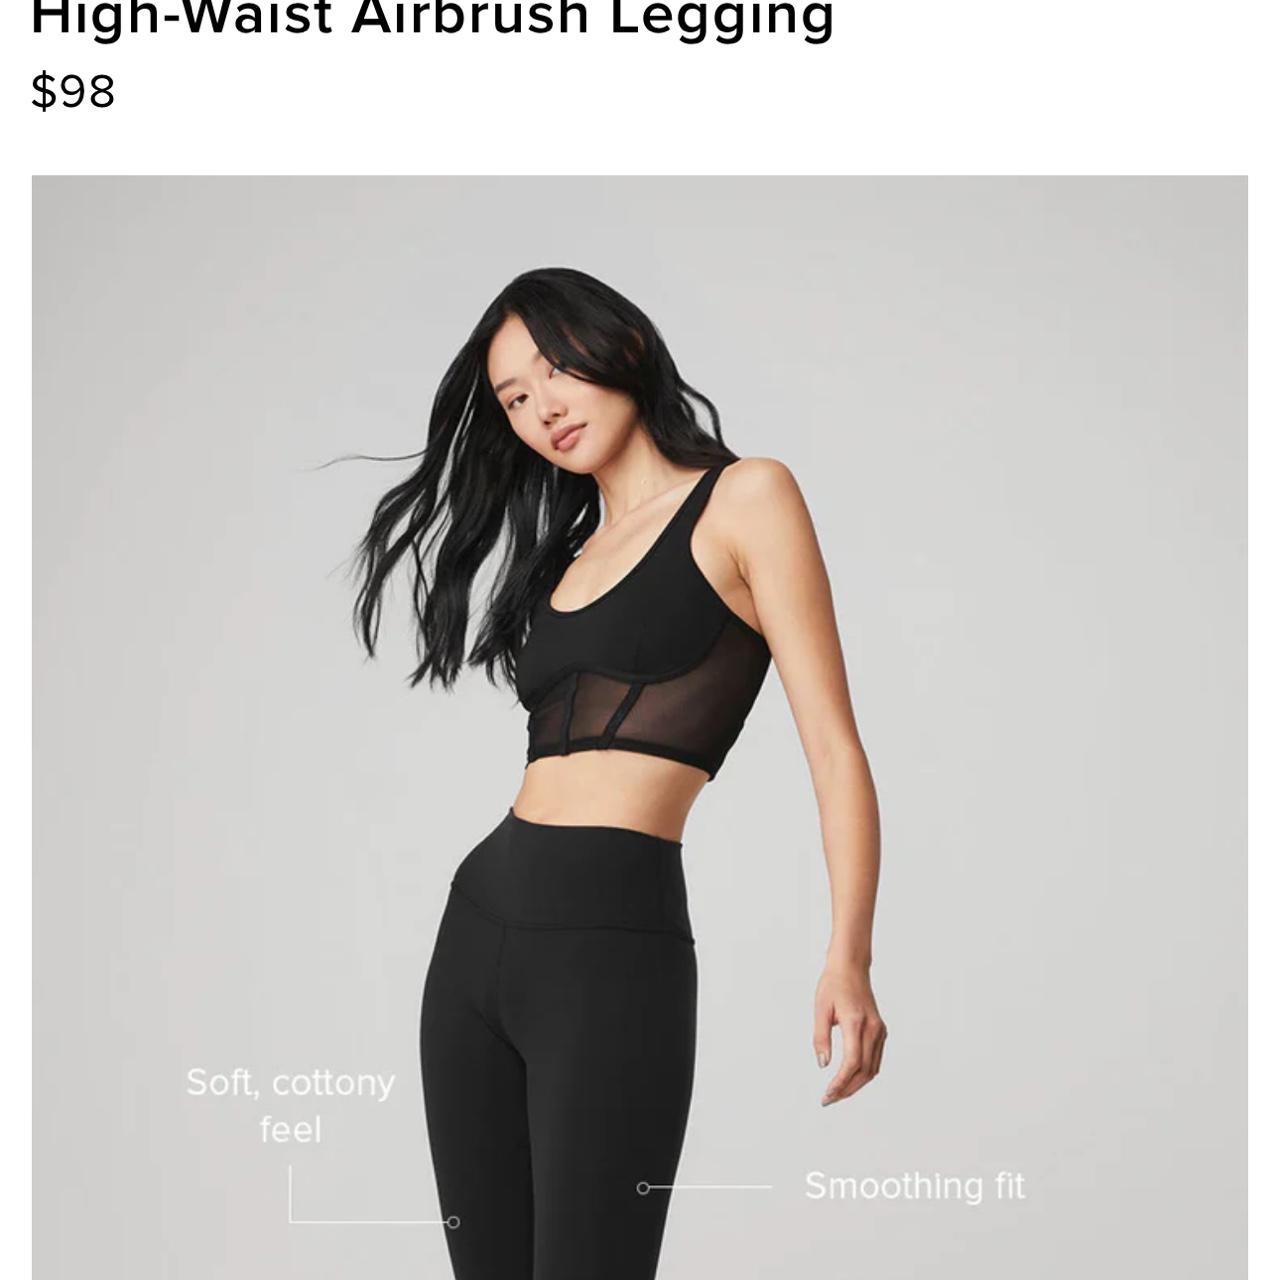 Alo Yoga High Waist Airbrush Leggings